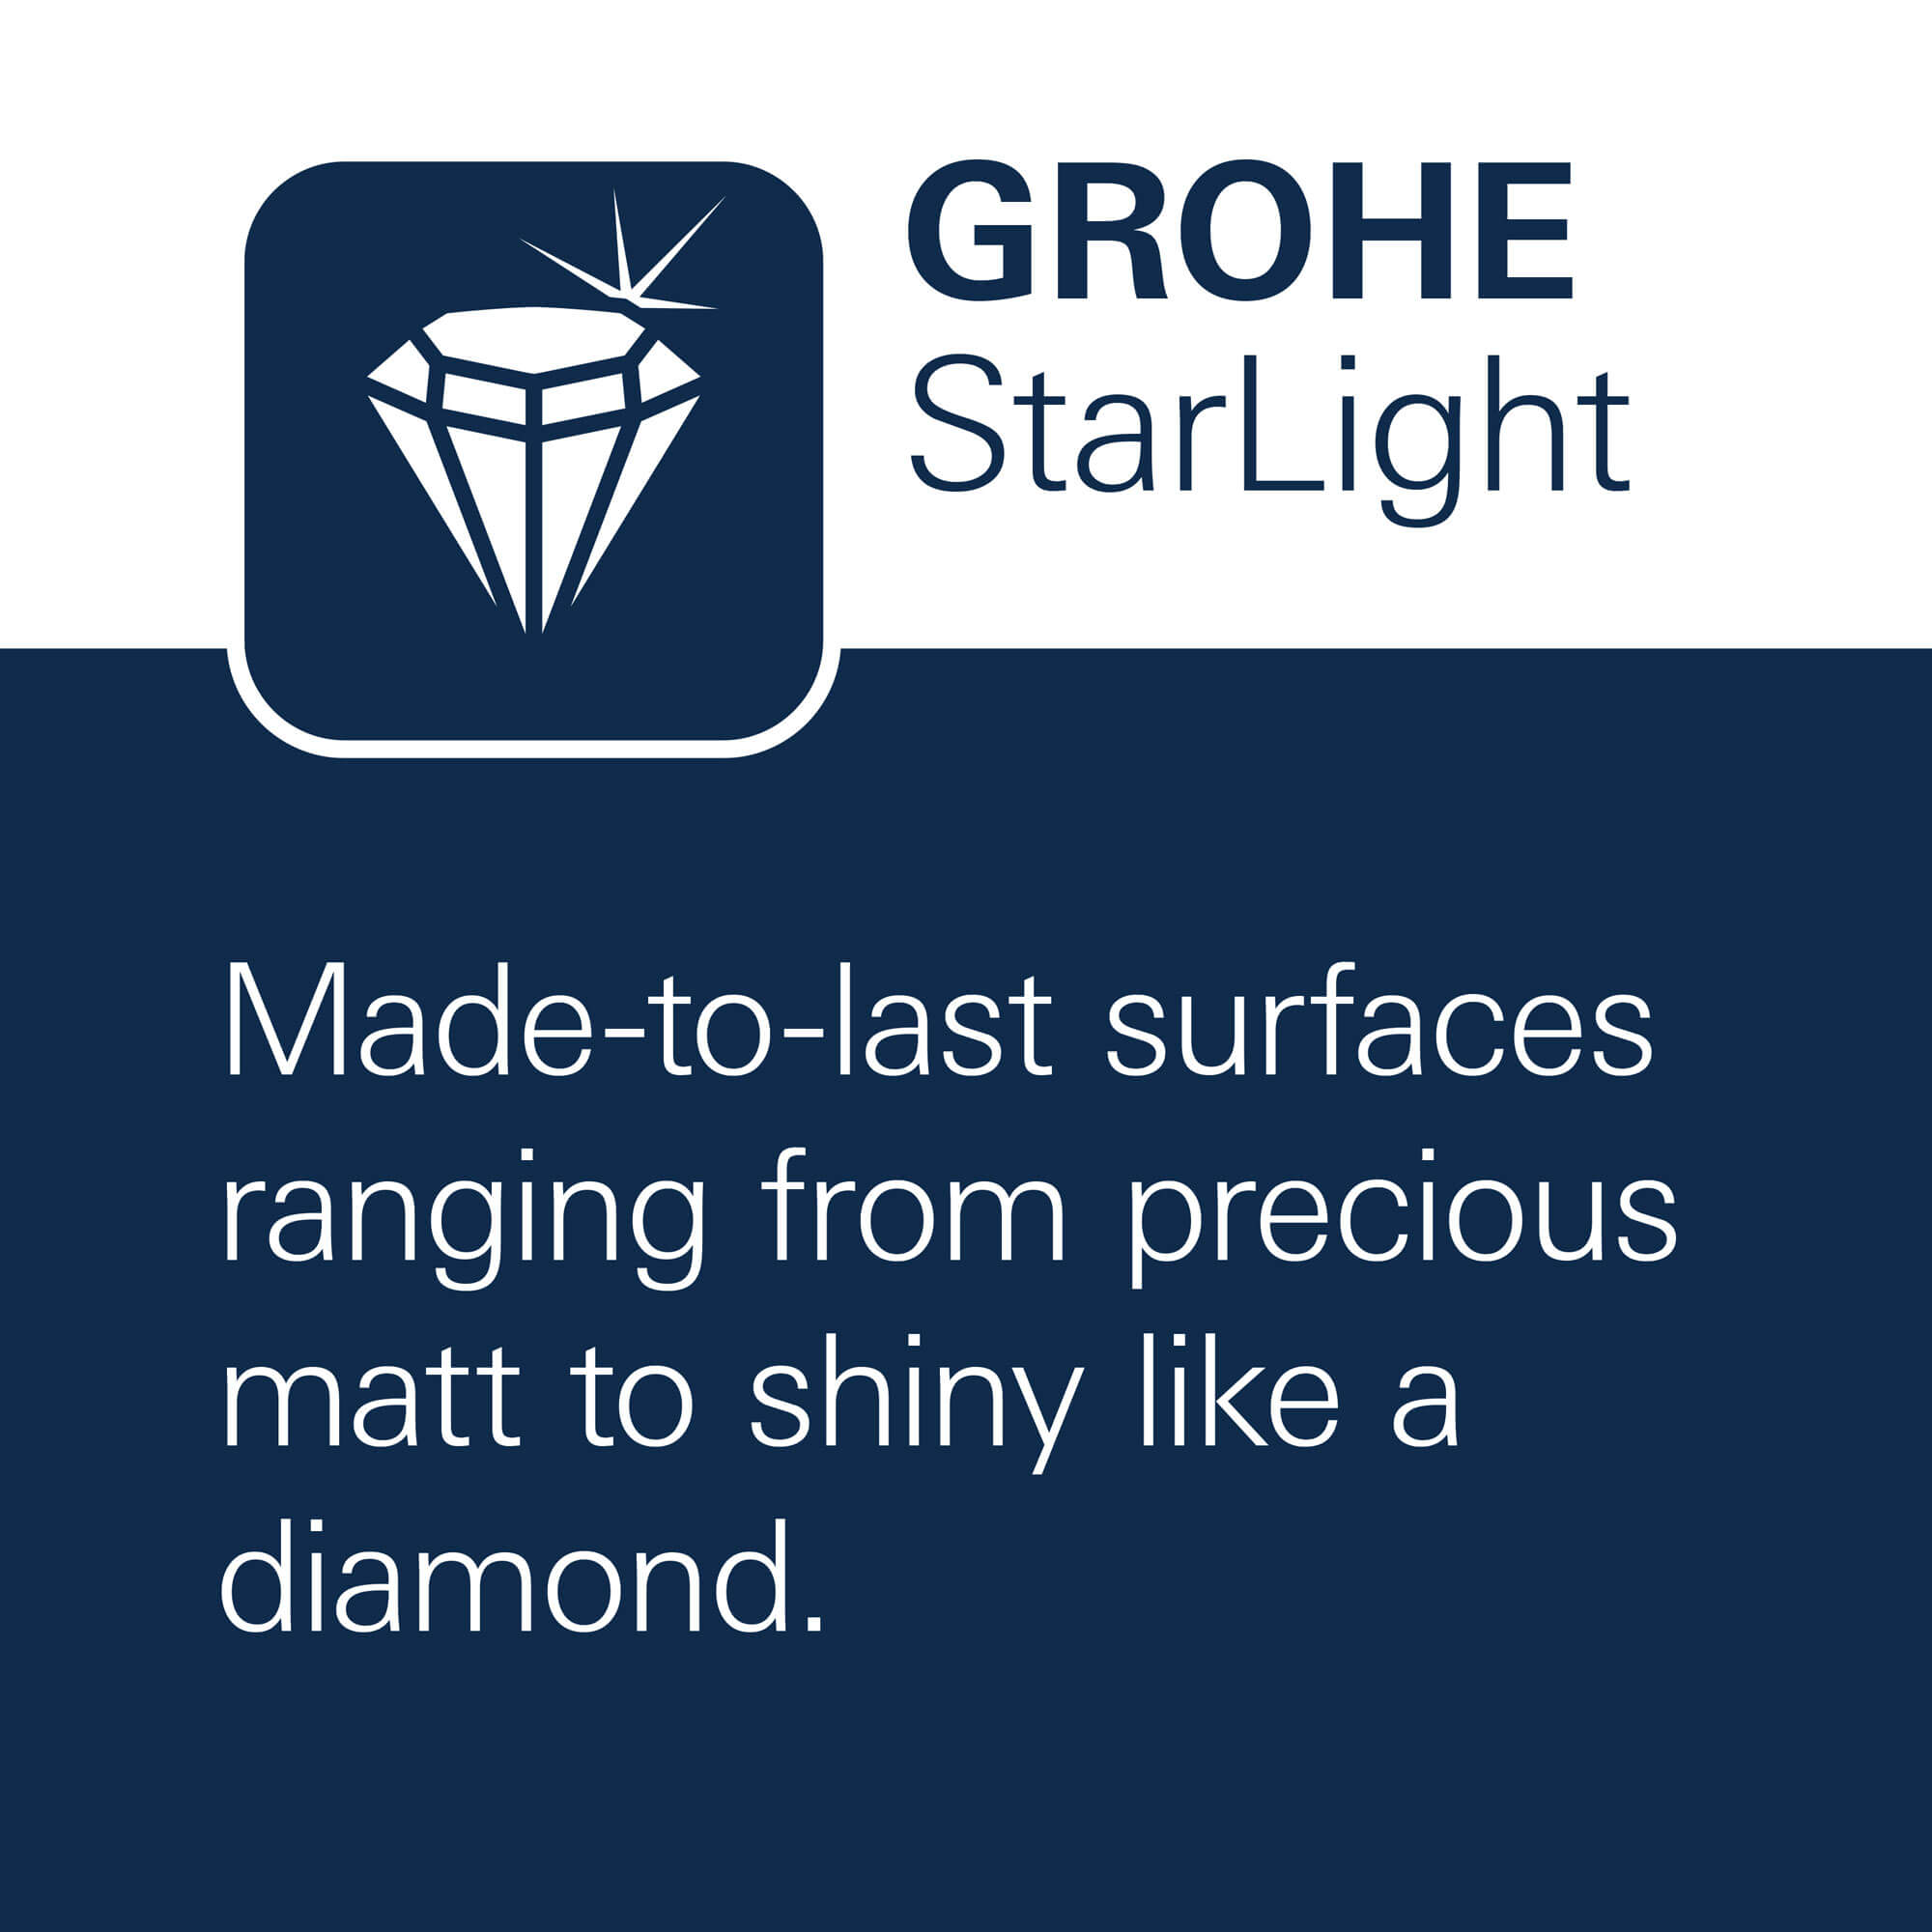 GROHE StarLight - Made-to-last surfaces ranging from precious matt to shiny like a diamond.